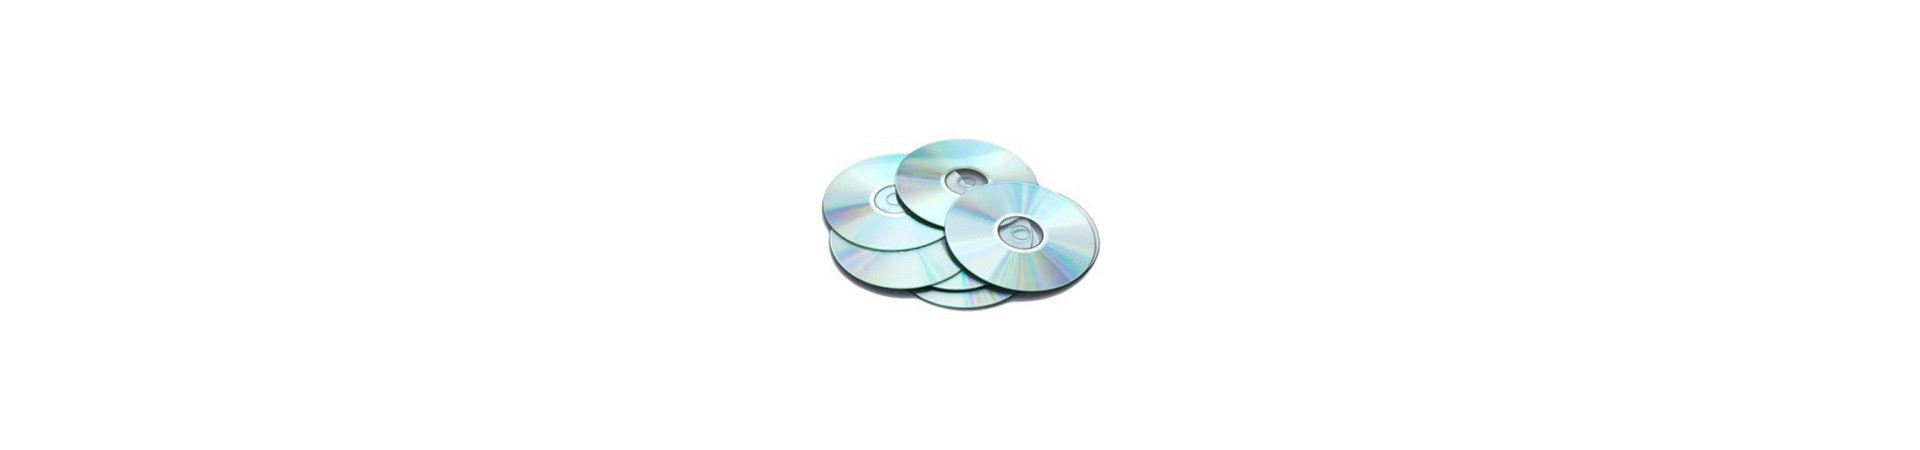 CD , DVD